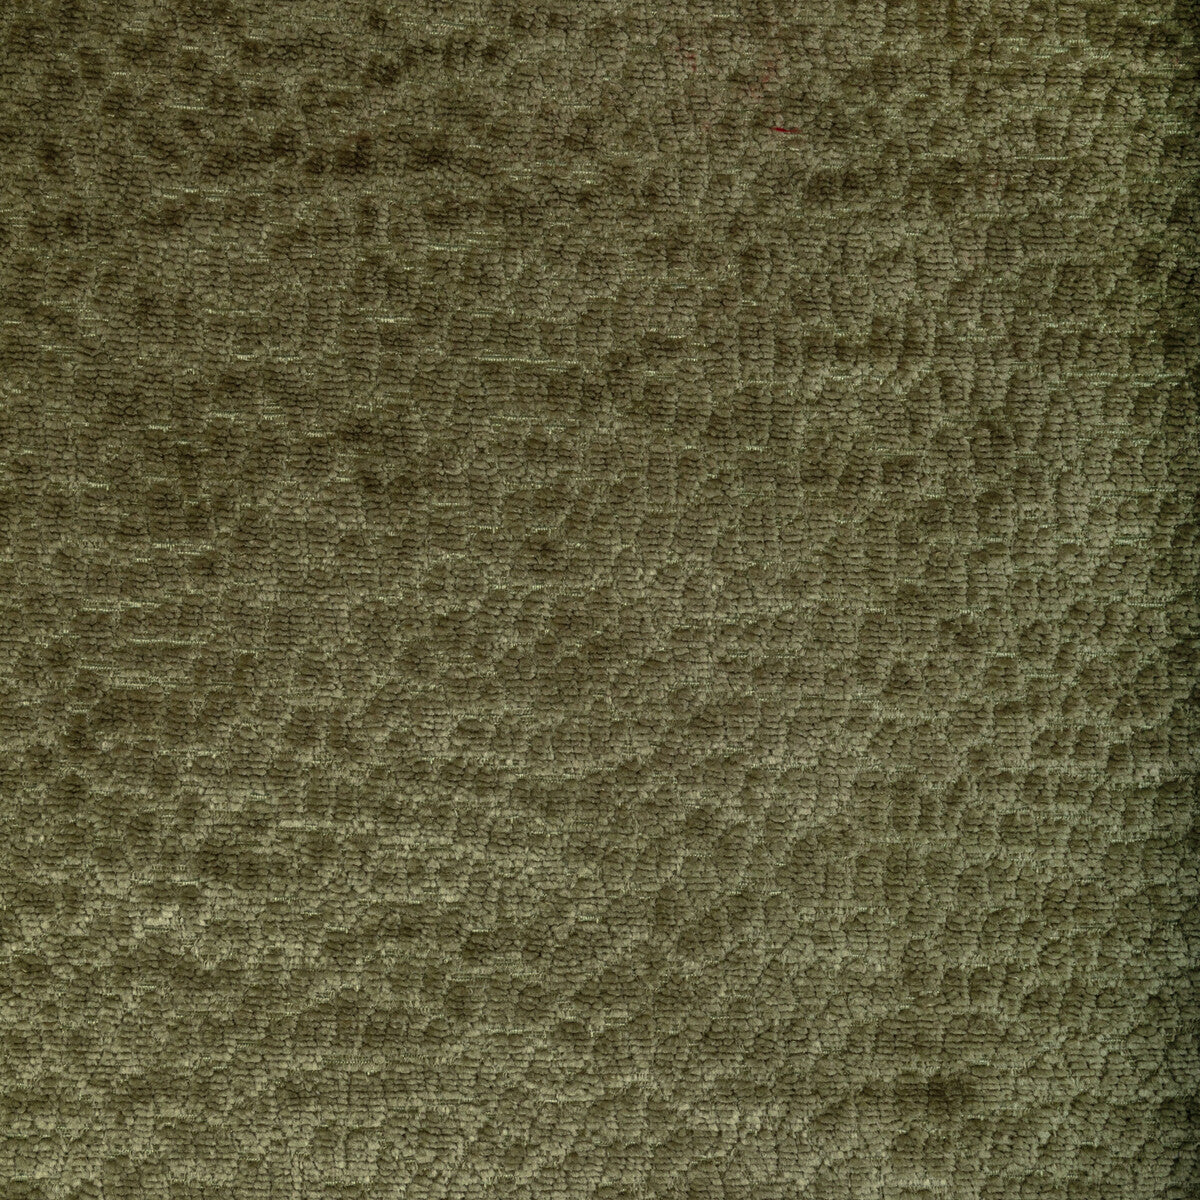 Kravet Smart fabric in 36606-130 color - pattern 36606.130.0 - by Kravet Smart in the Performance Kravetarmor collection